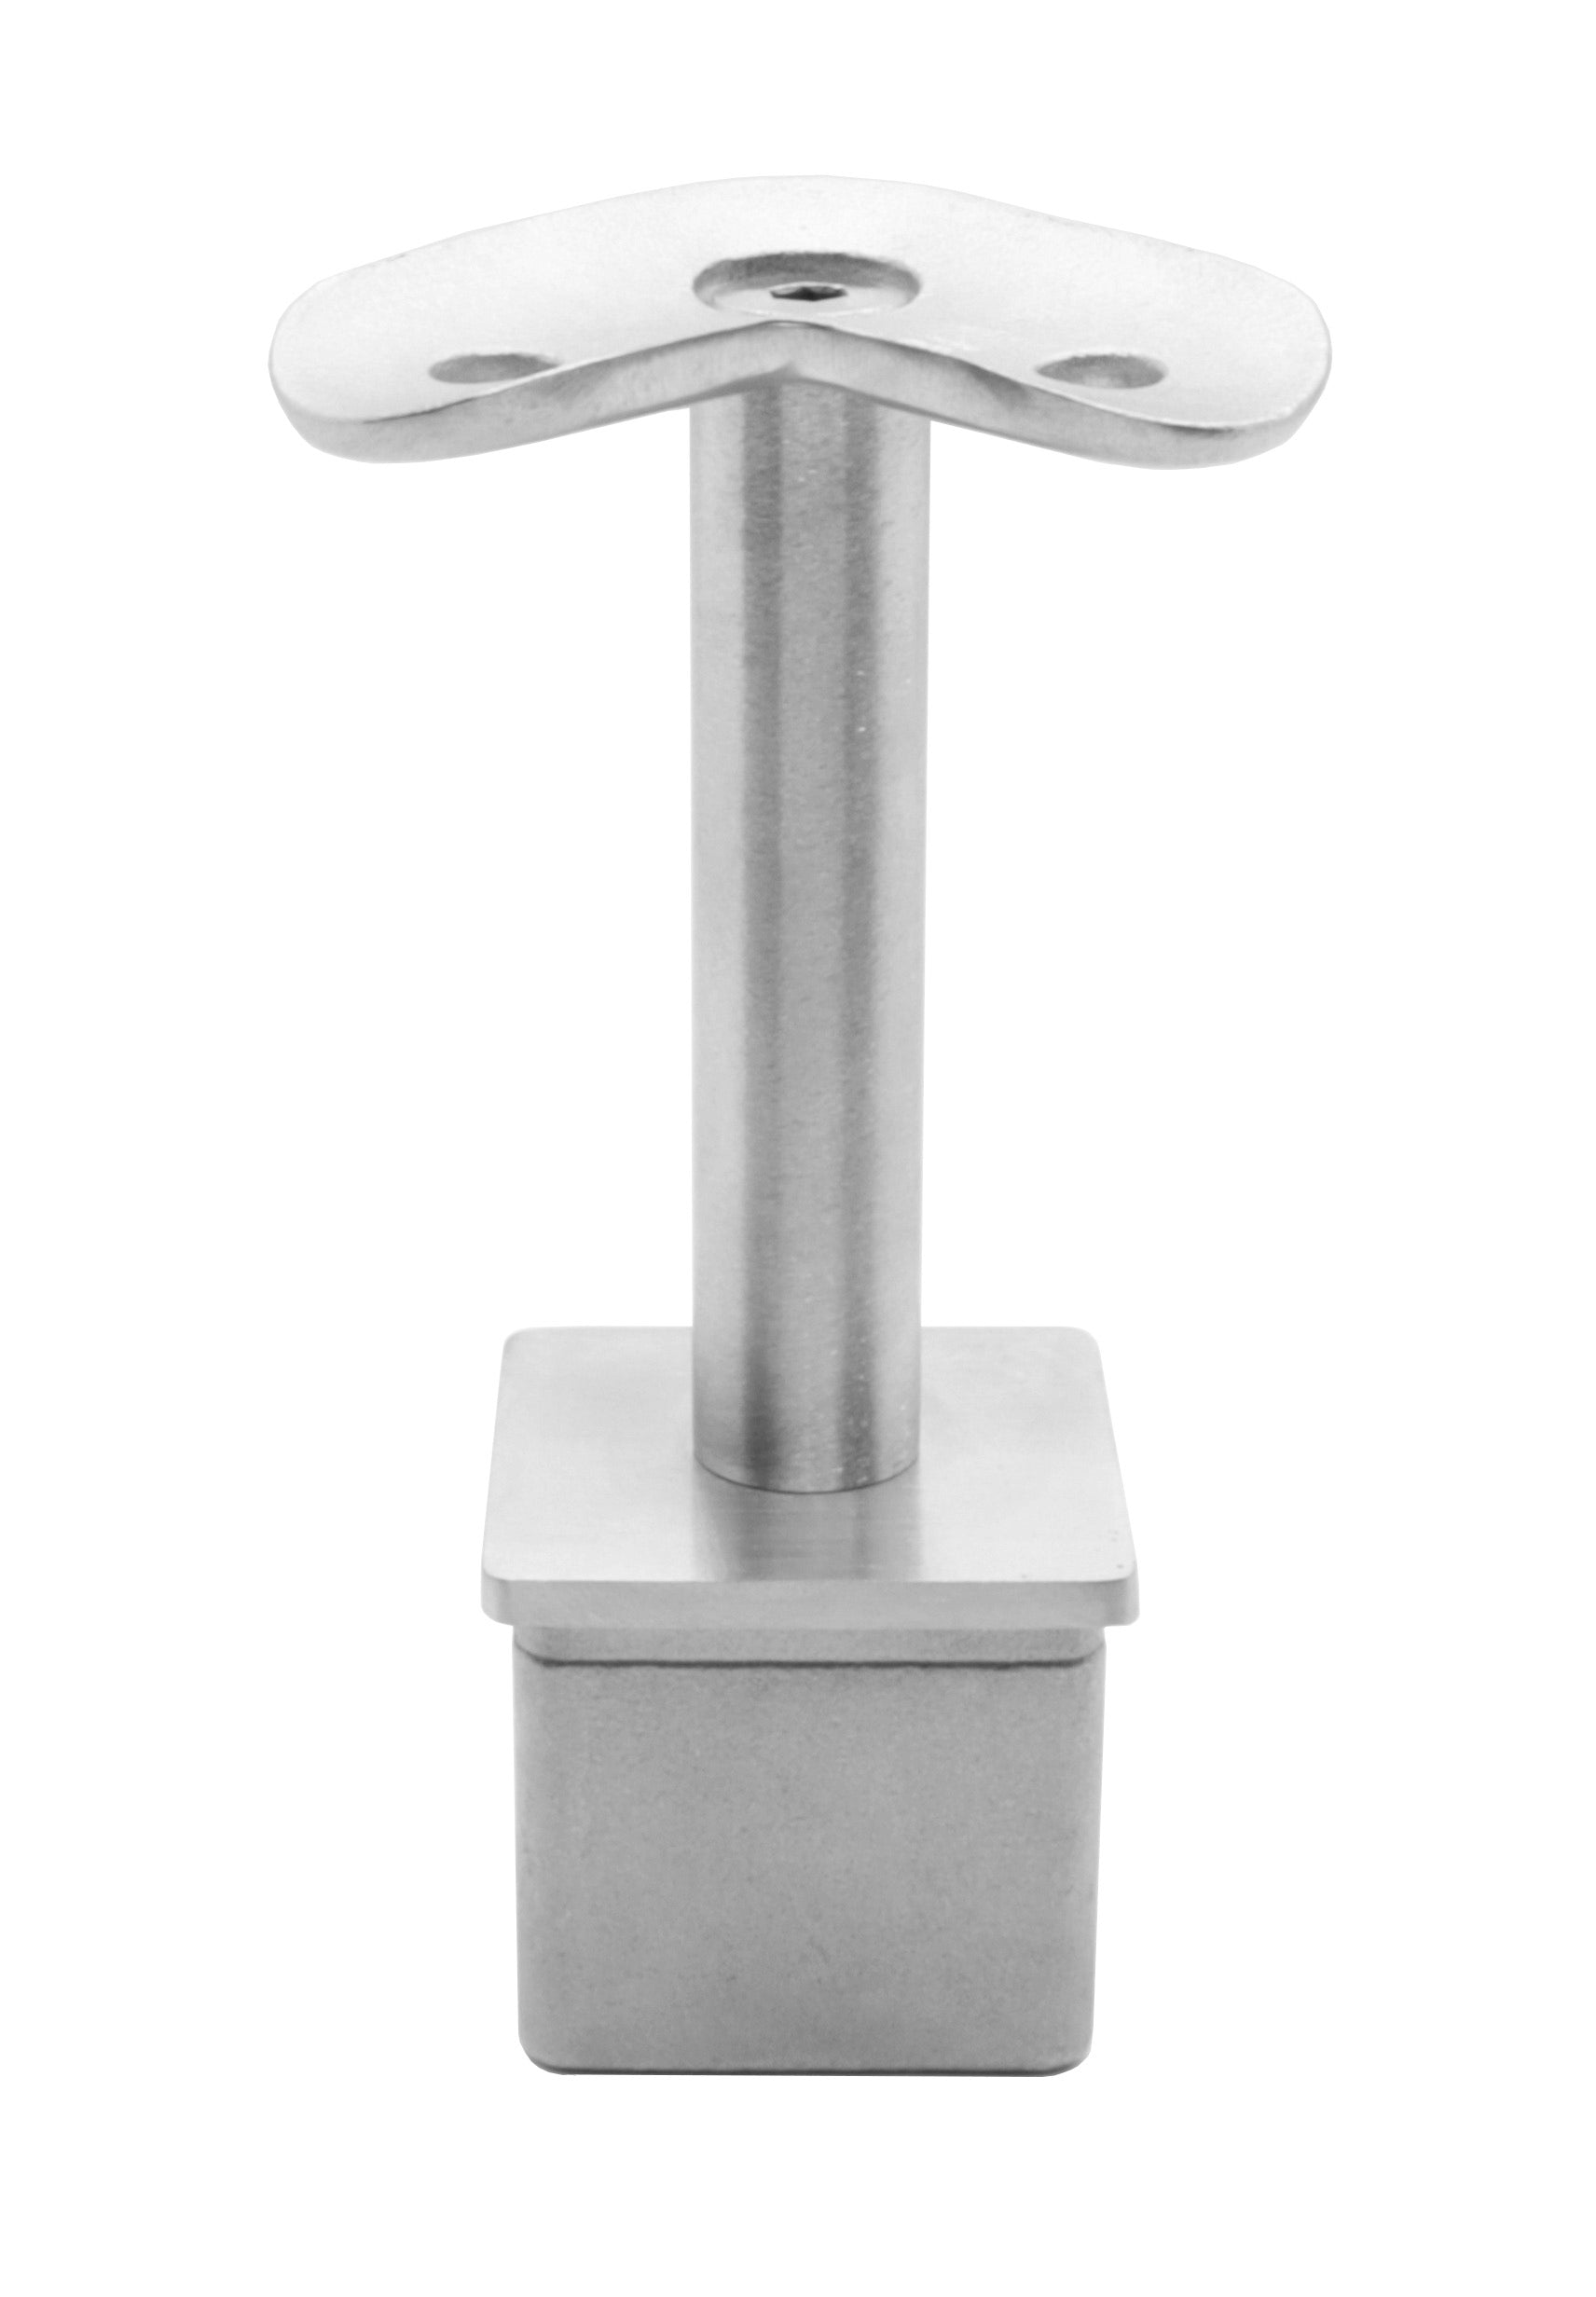 90 Degree Round Stem Post Handrail Bracket Stainless Steel for 1-1/2" Post Fitting (P0150-90-TOP-ROUND) - SHEMONICO